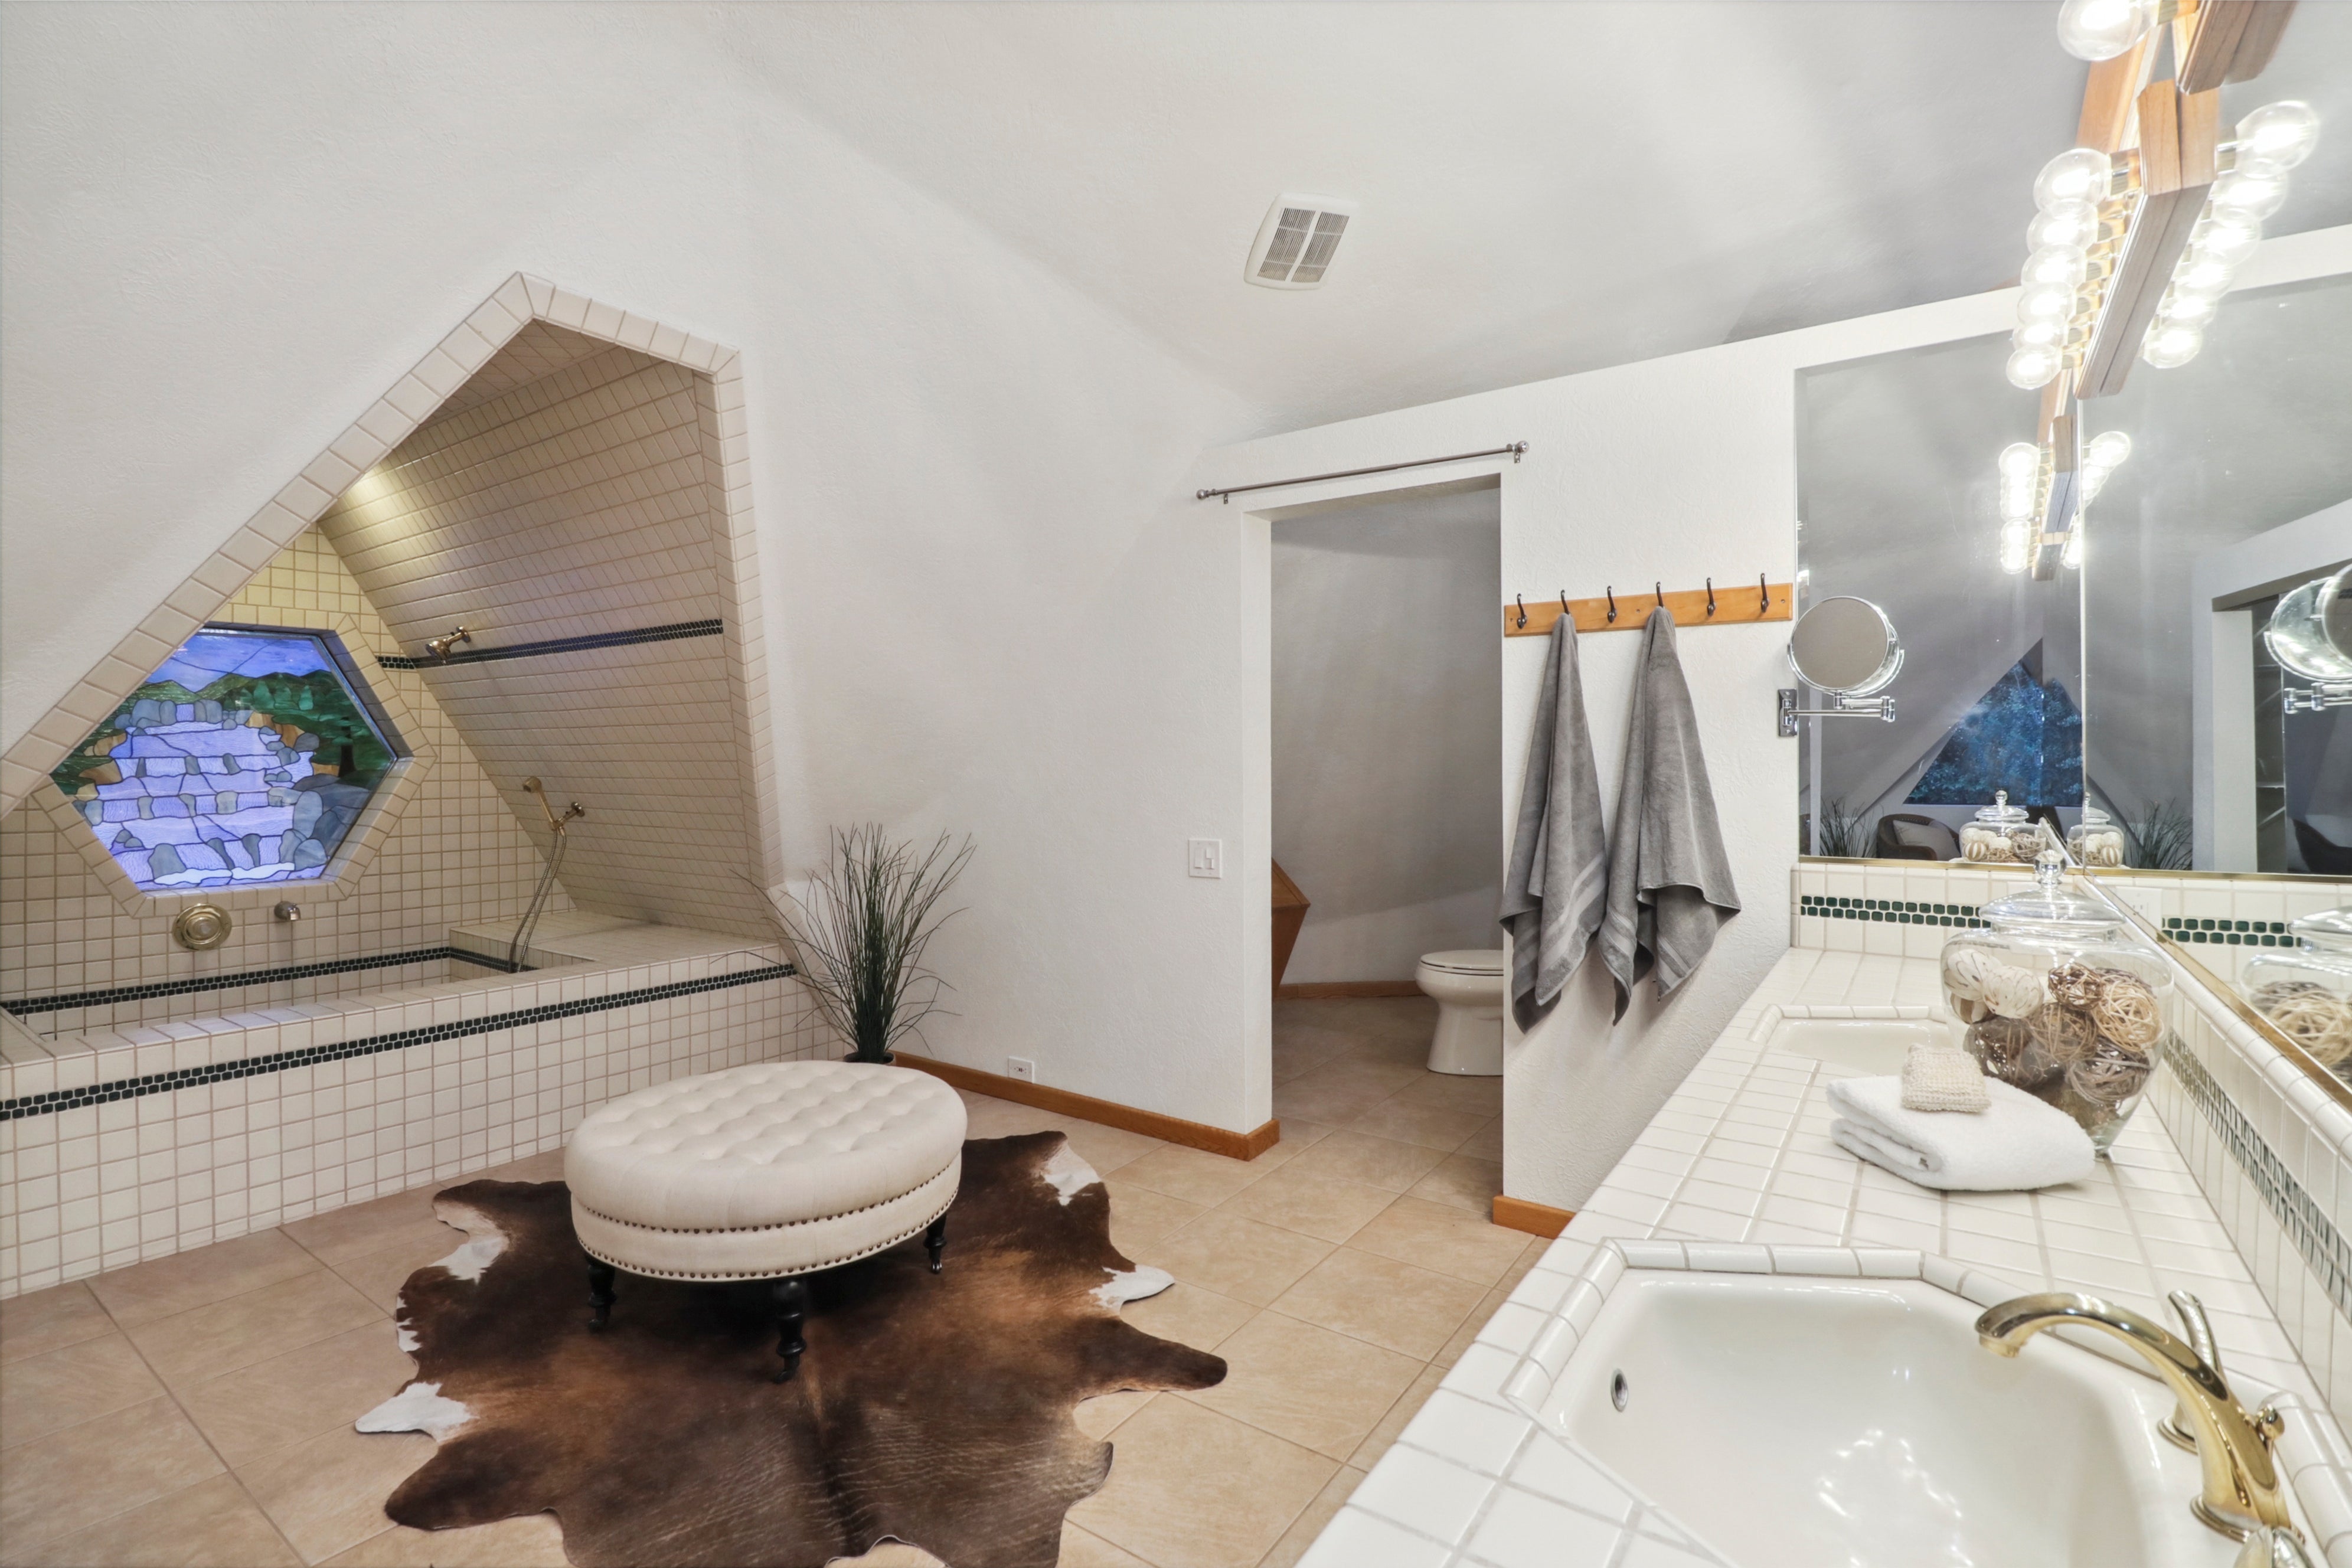 Premiere Home Staging Projects | Bathroom interior design idea - Crabtree Ct, Carmichael